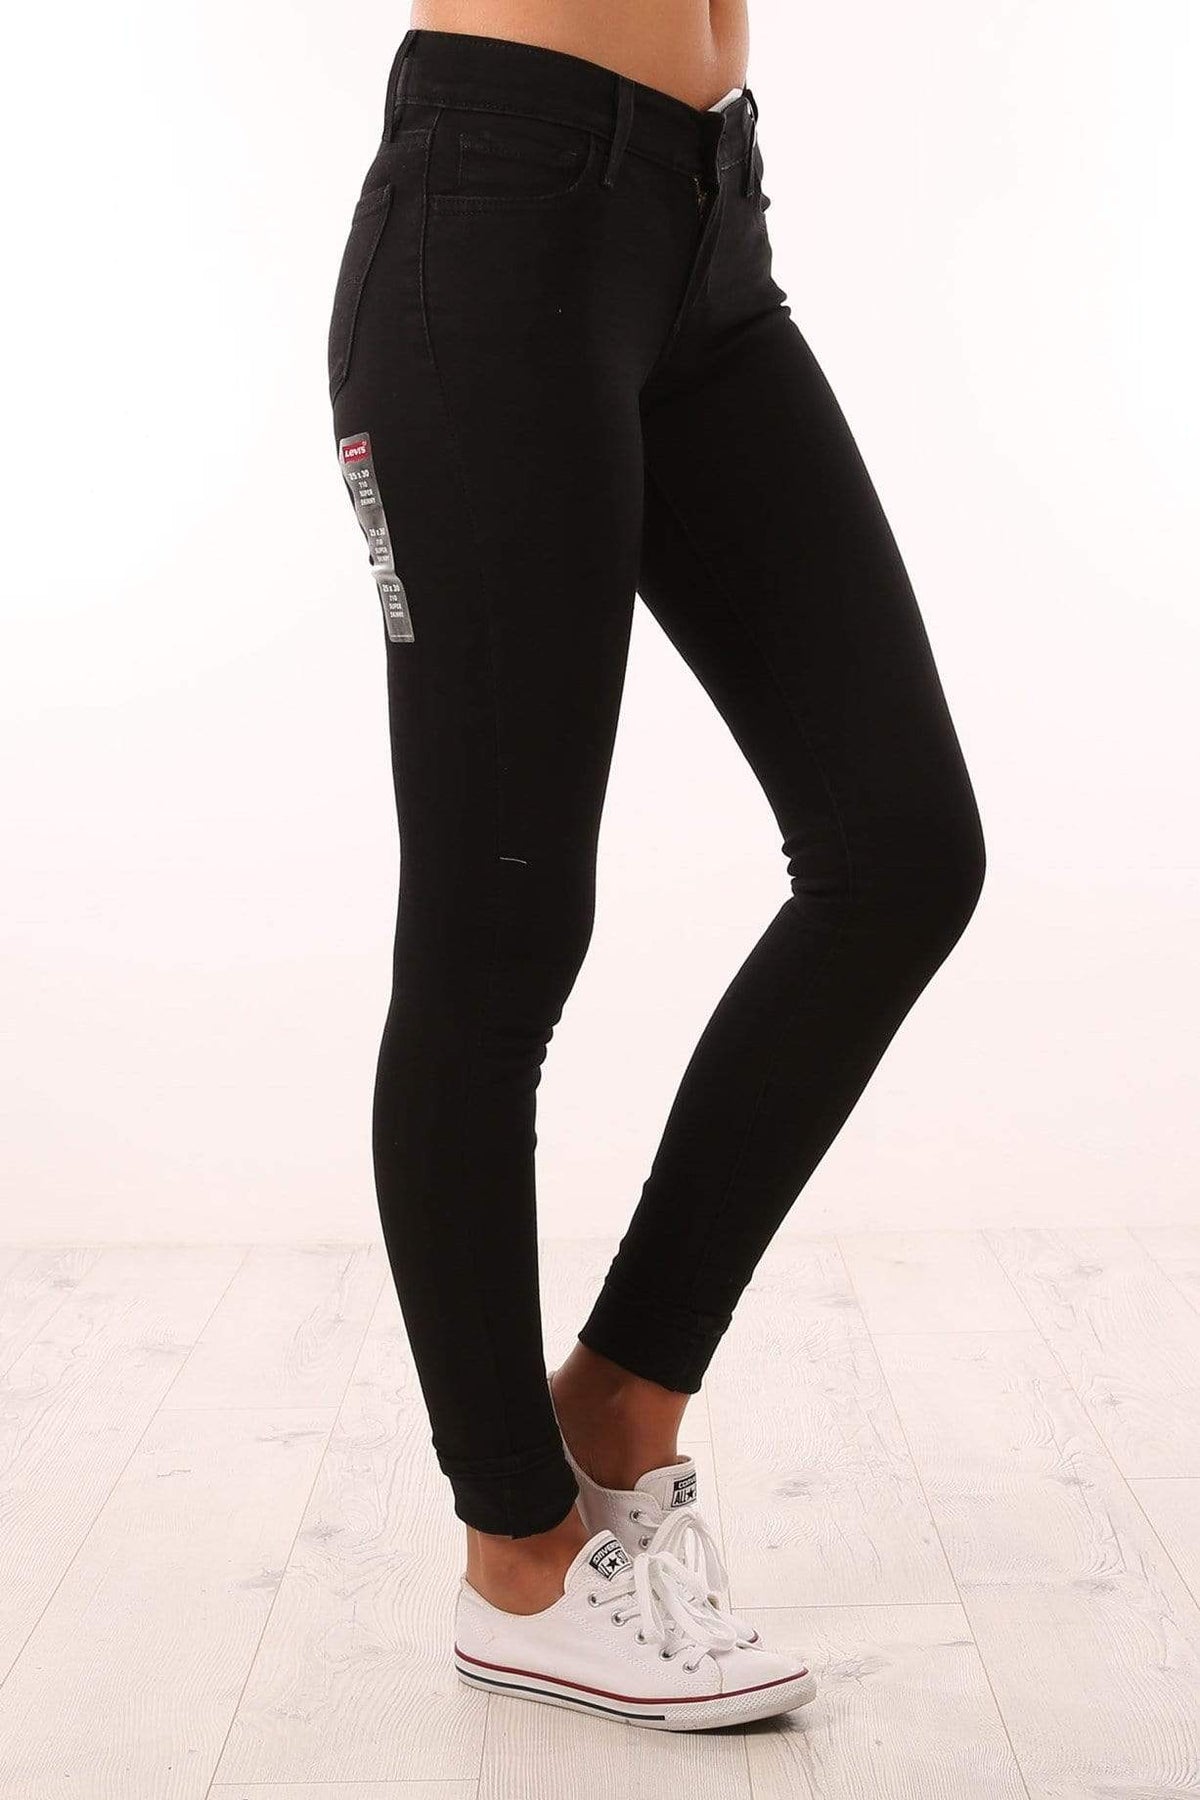 Hollister Jeans Size 5S W27 L28 Women's Super Skinny Low Rise Denim Pants